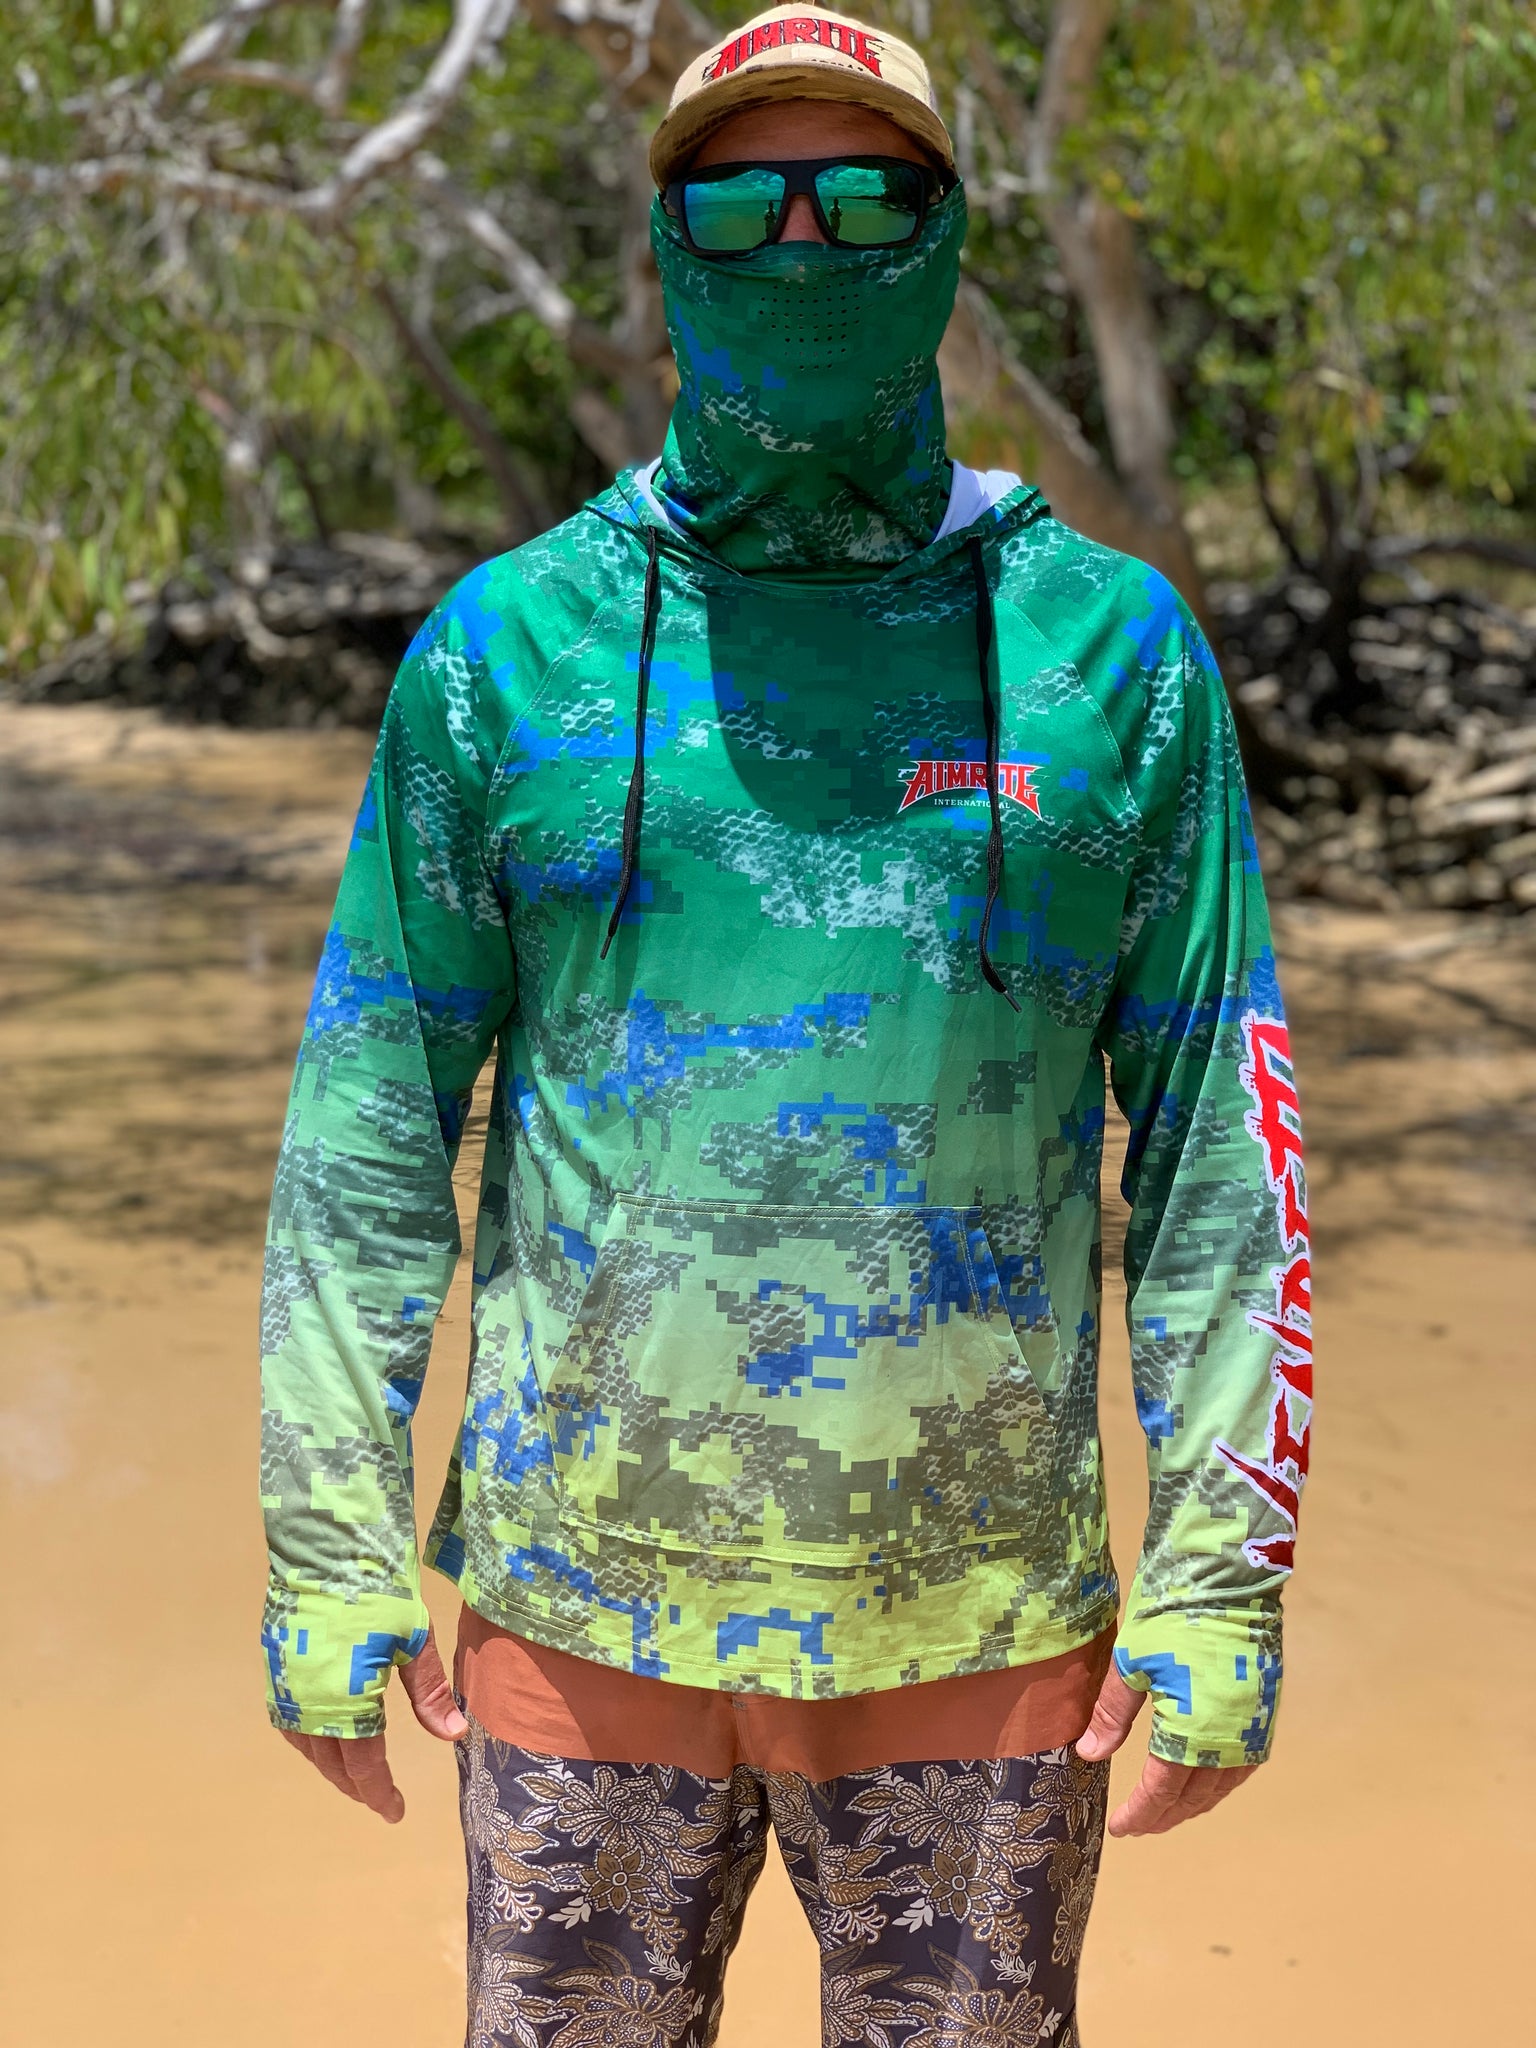 Performance Fishing Hoodie with Face Mask Sunblock Shirt Hooded Long Sleeve  with Drawstrings Pocket,Grey, Large price in Saudi Arabia,  Saudi  Arabia